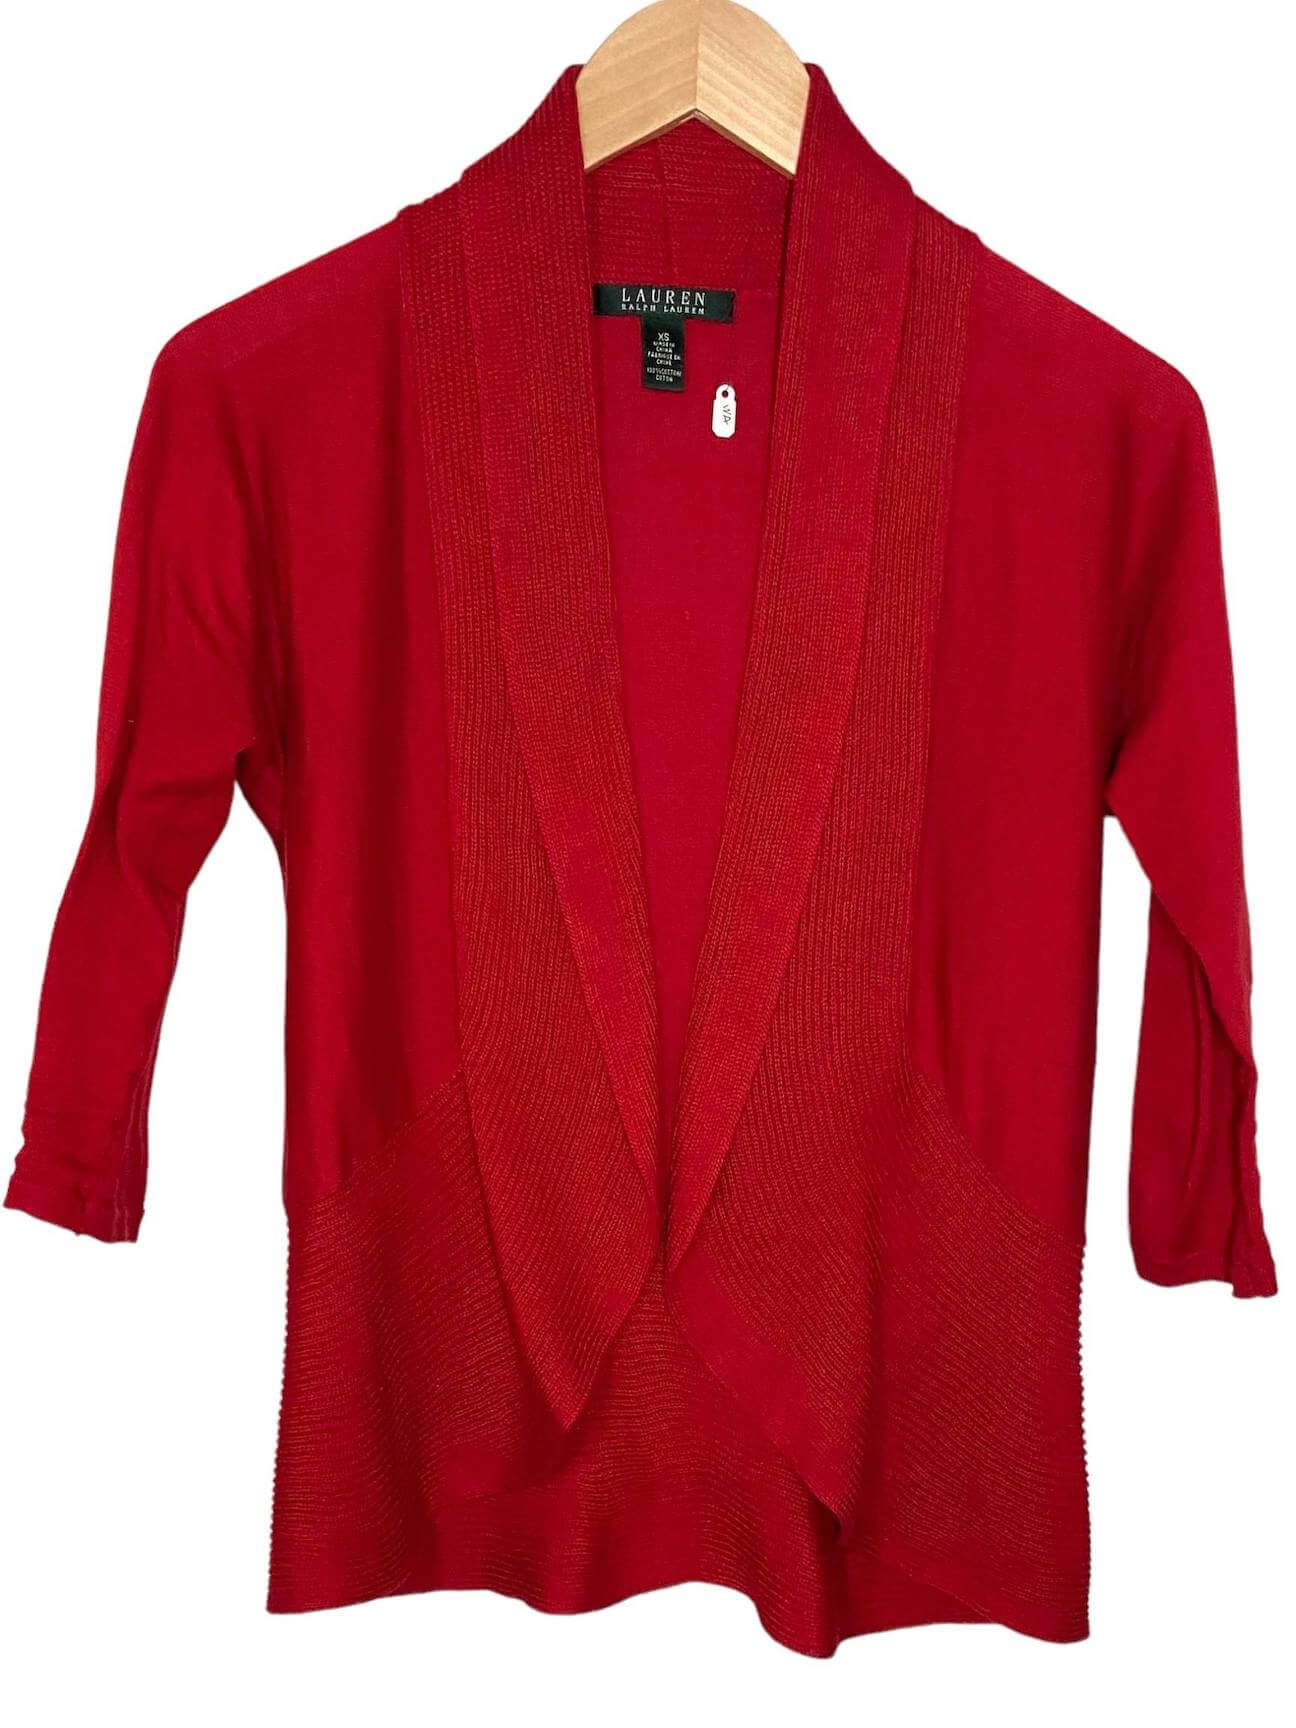 Dark Winter Lauren by Ralph Lauren cranberry red shawl neck open cardigan sweater